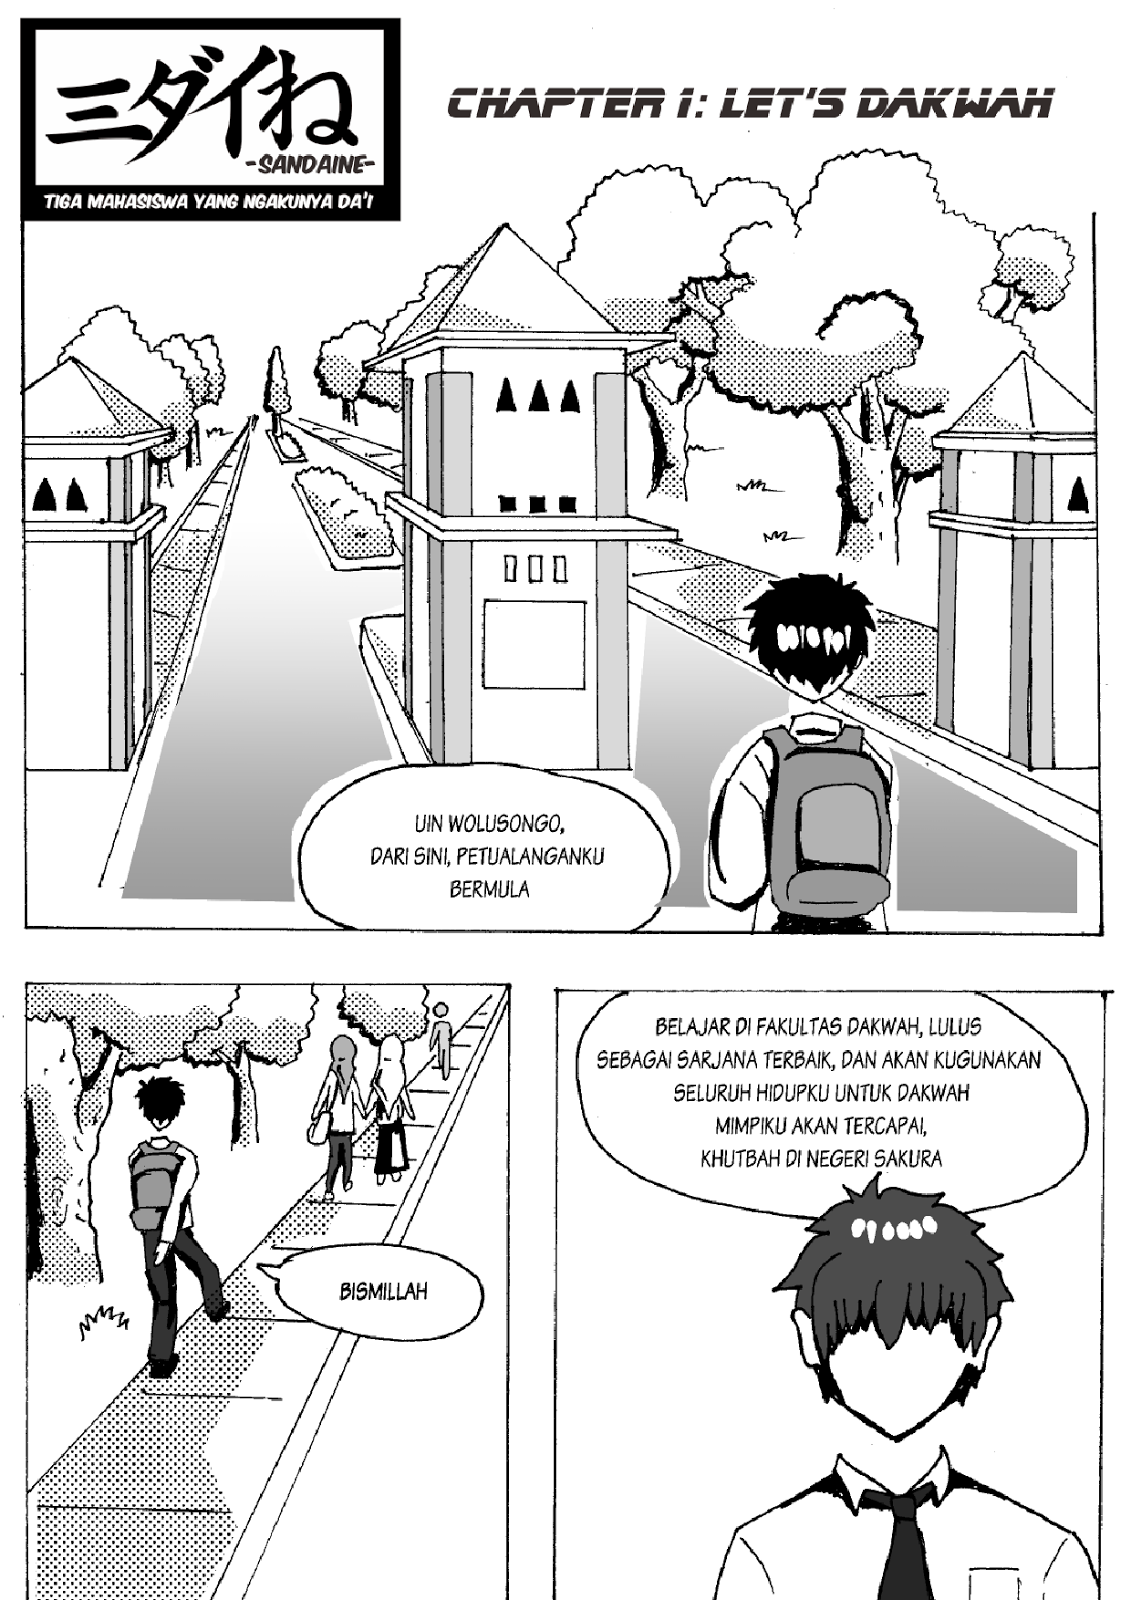 Komik Dakwah Sandaine Chapter 1 Lets Dakwah Karya Musthofa